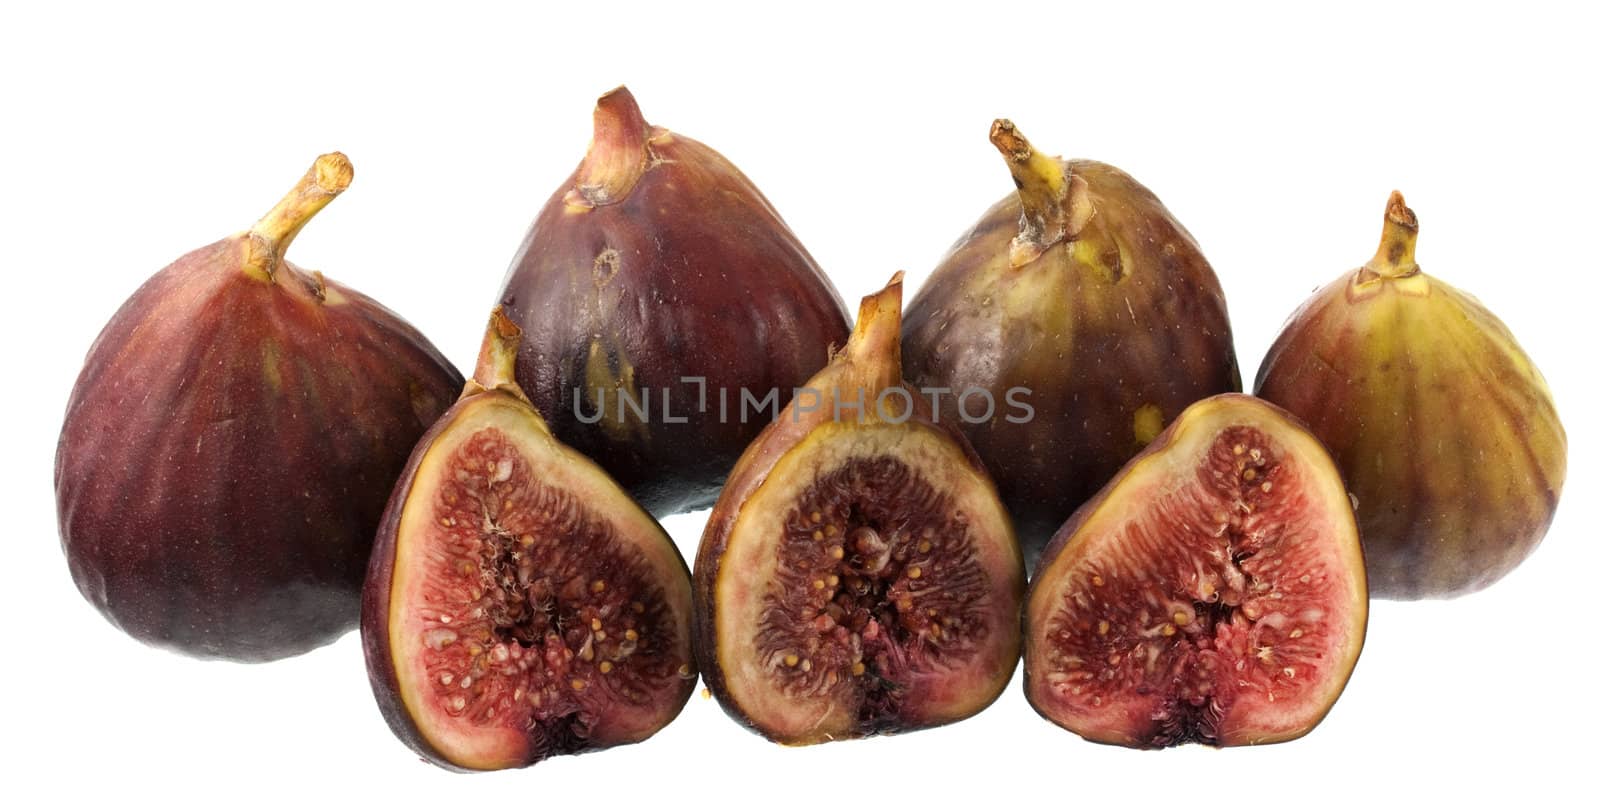 fresh Turkish figs in a row by PixelsAway